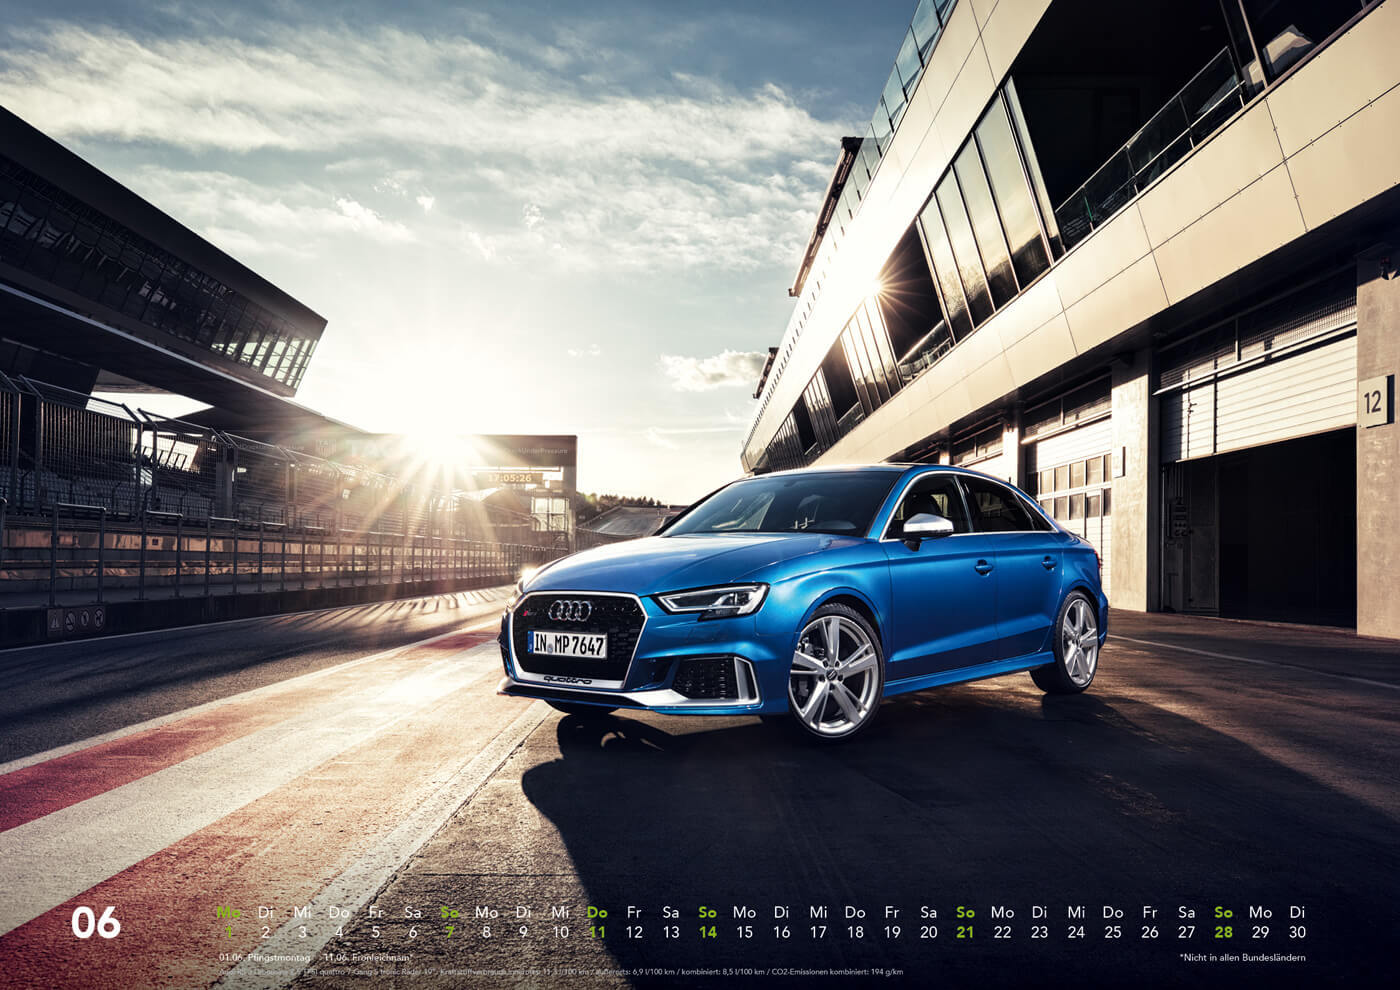 Audi Kalender 2020 - Audi RS 3 Limousine